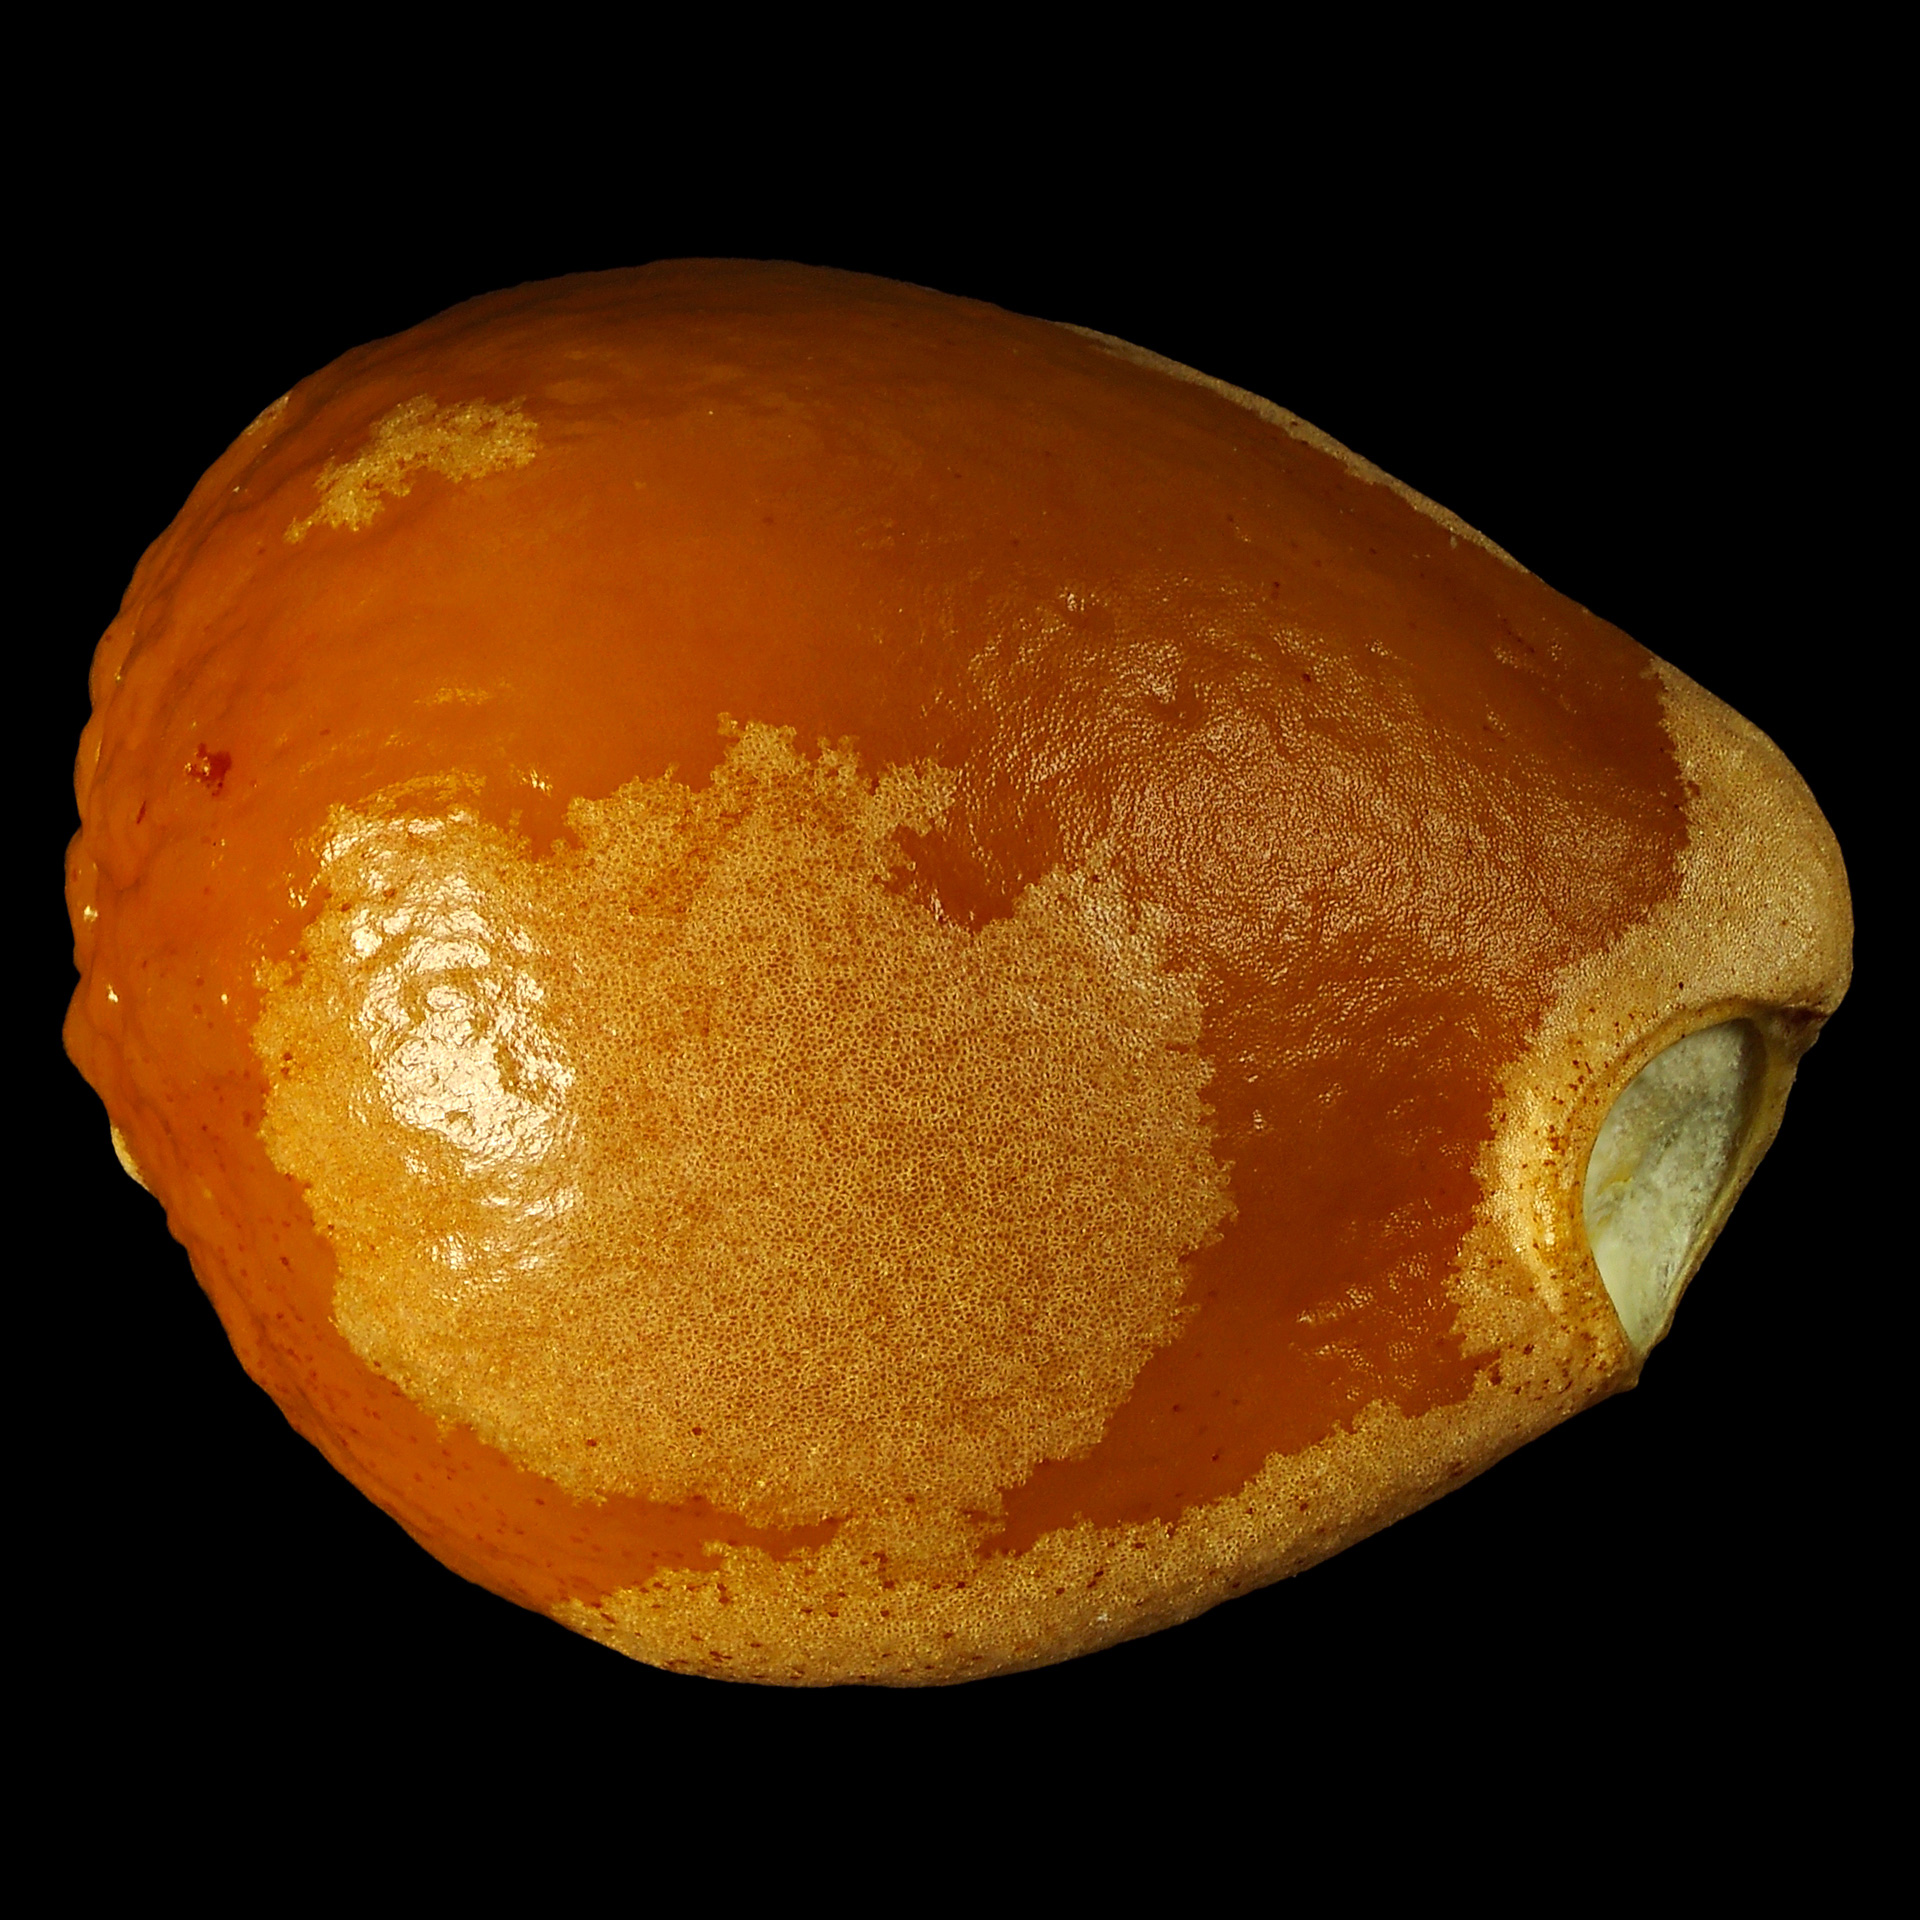 European bladdernut: Staphylea pinnata